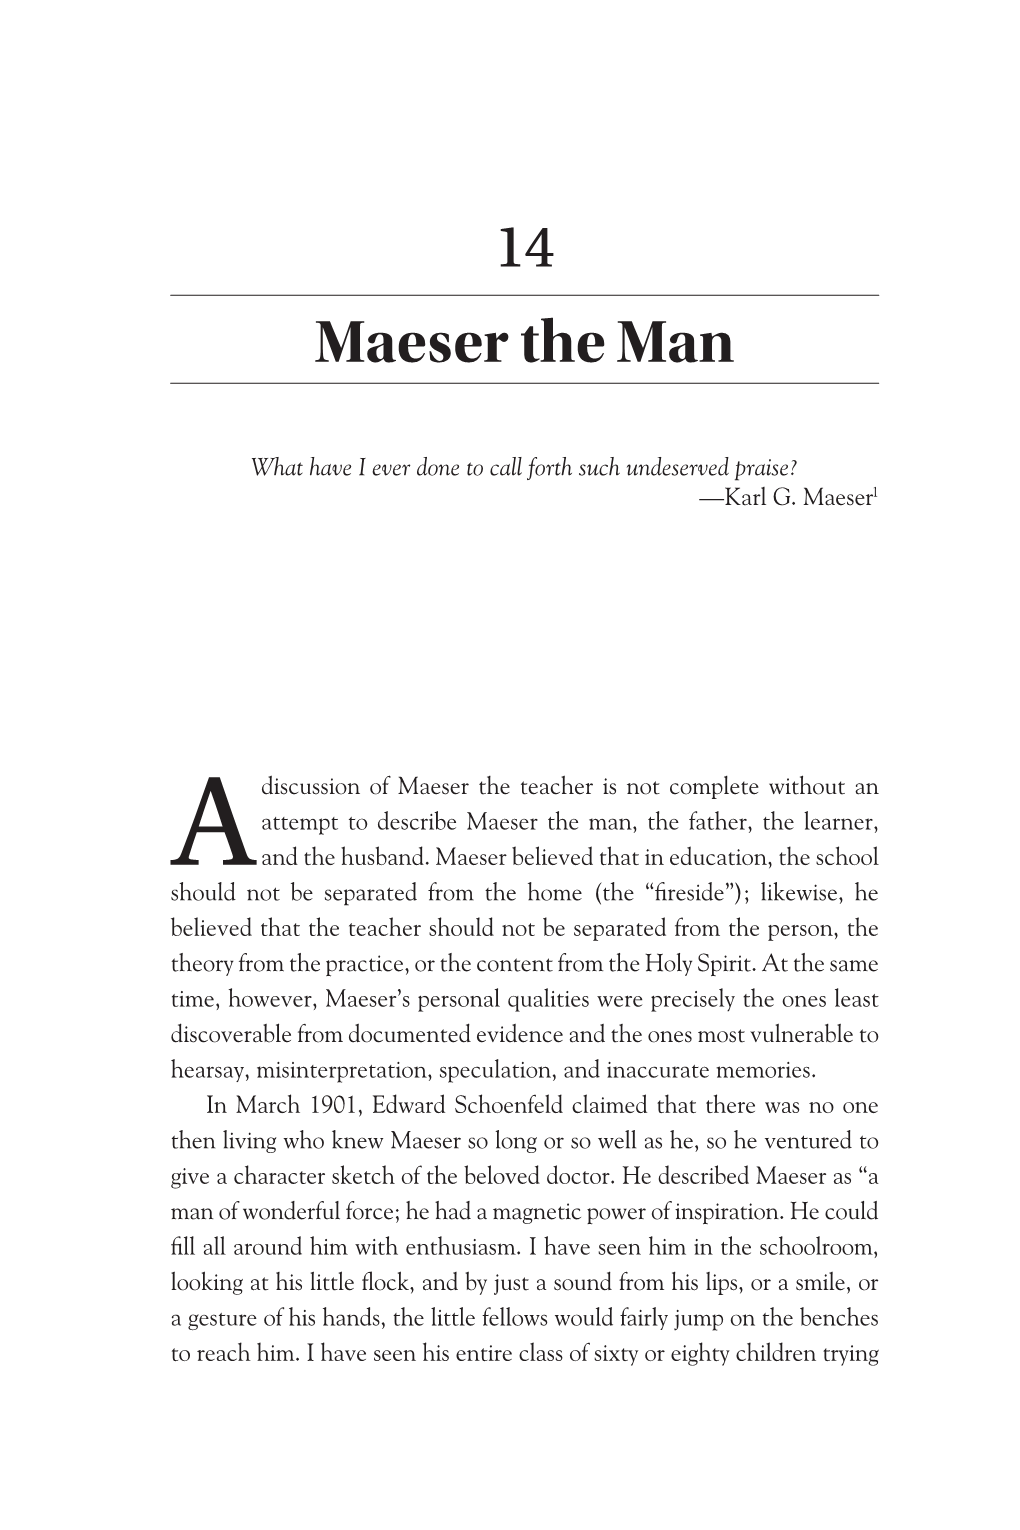 Maeser the Man